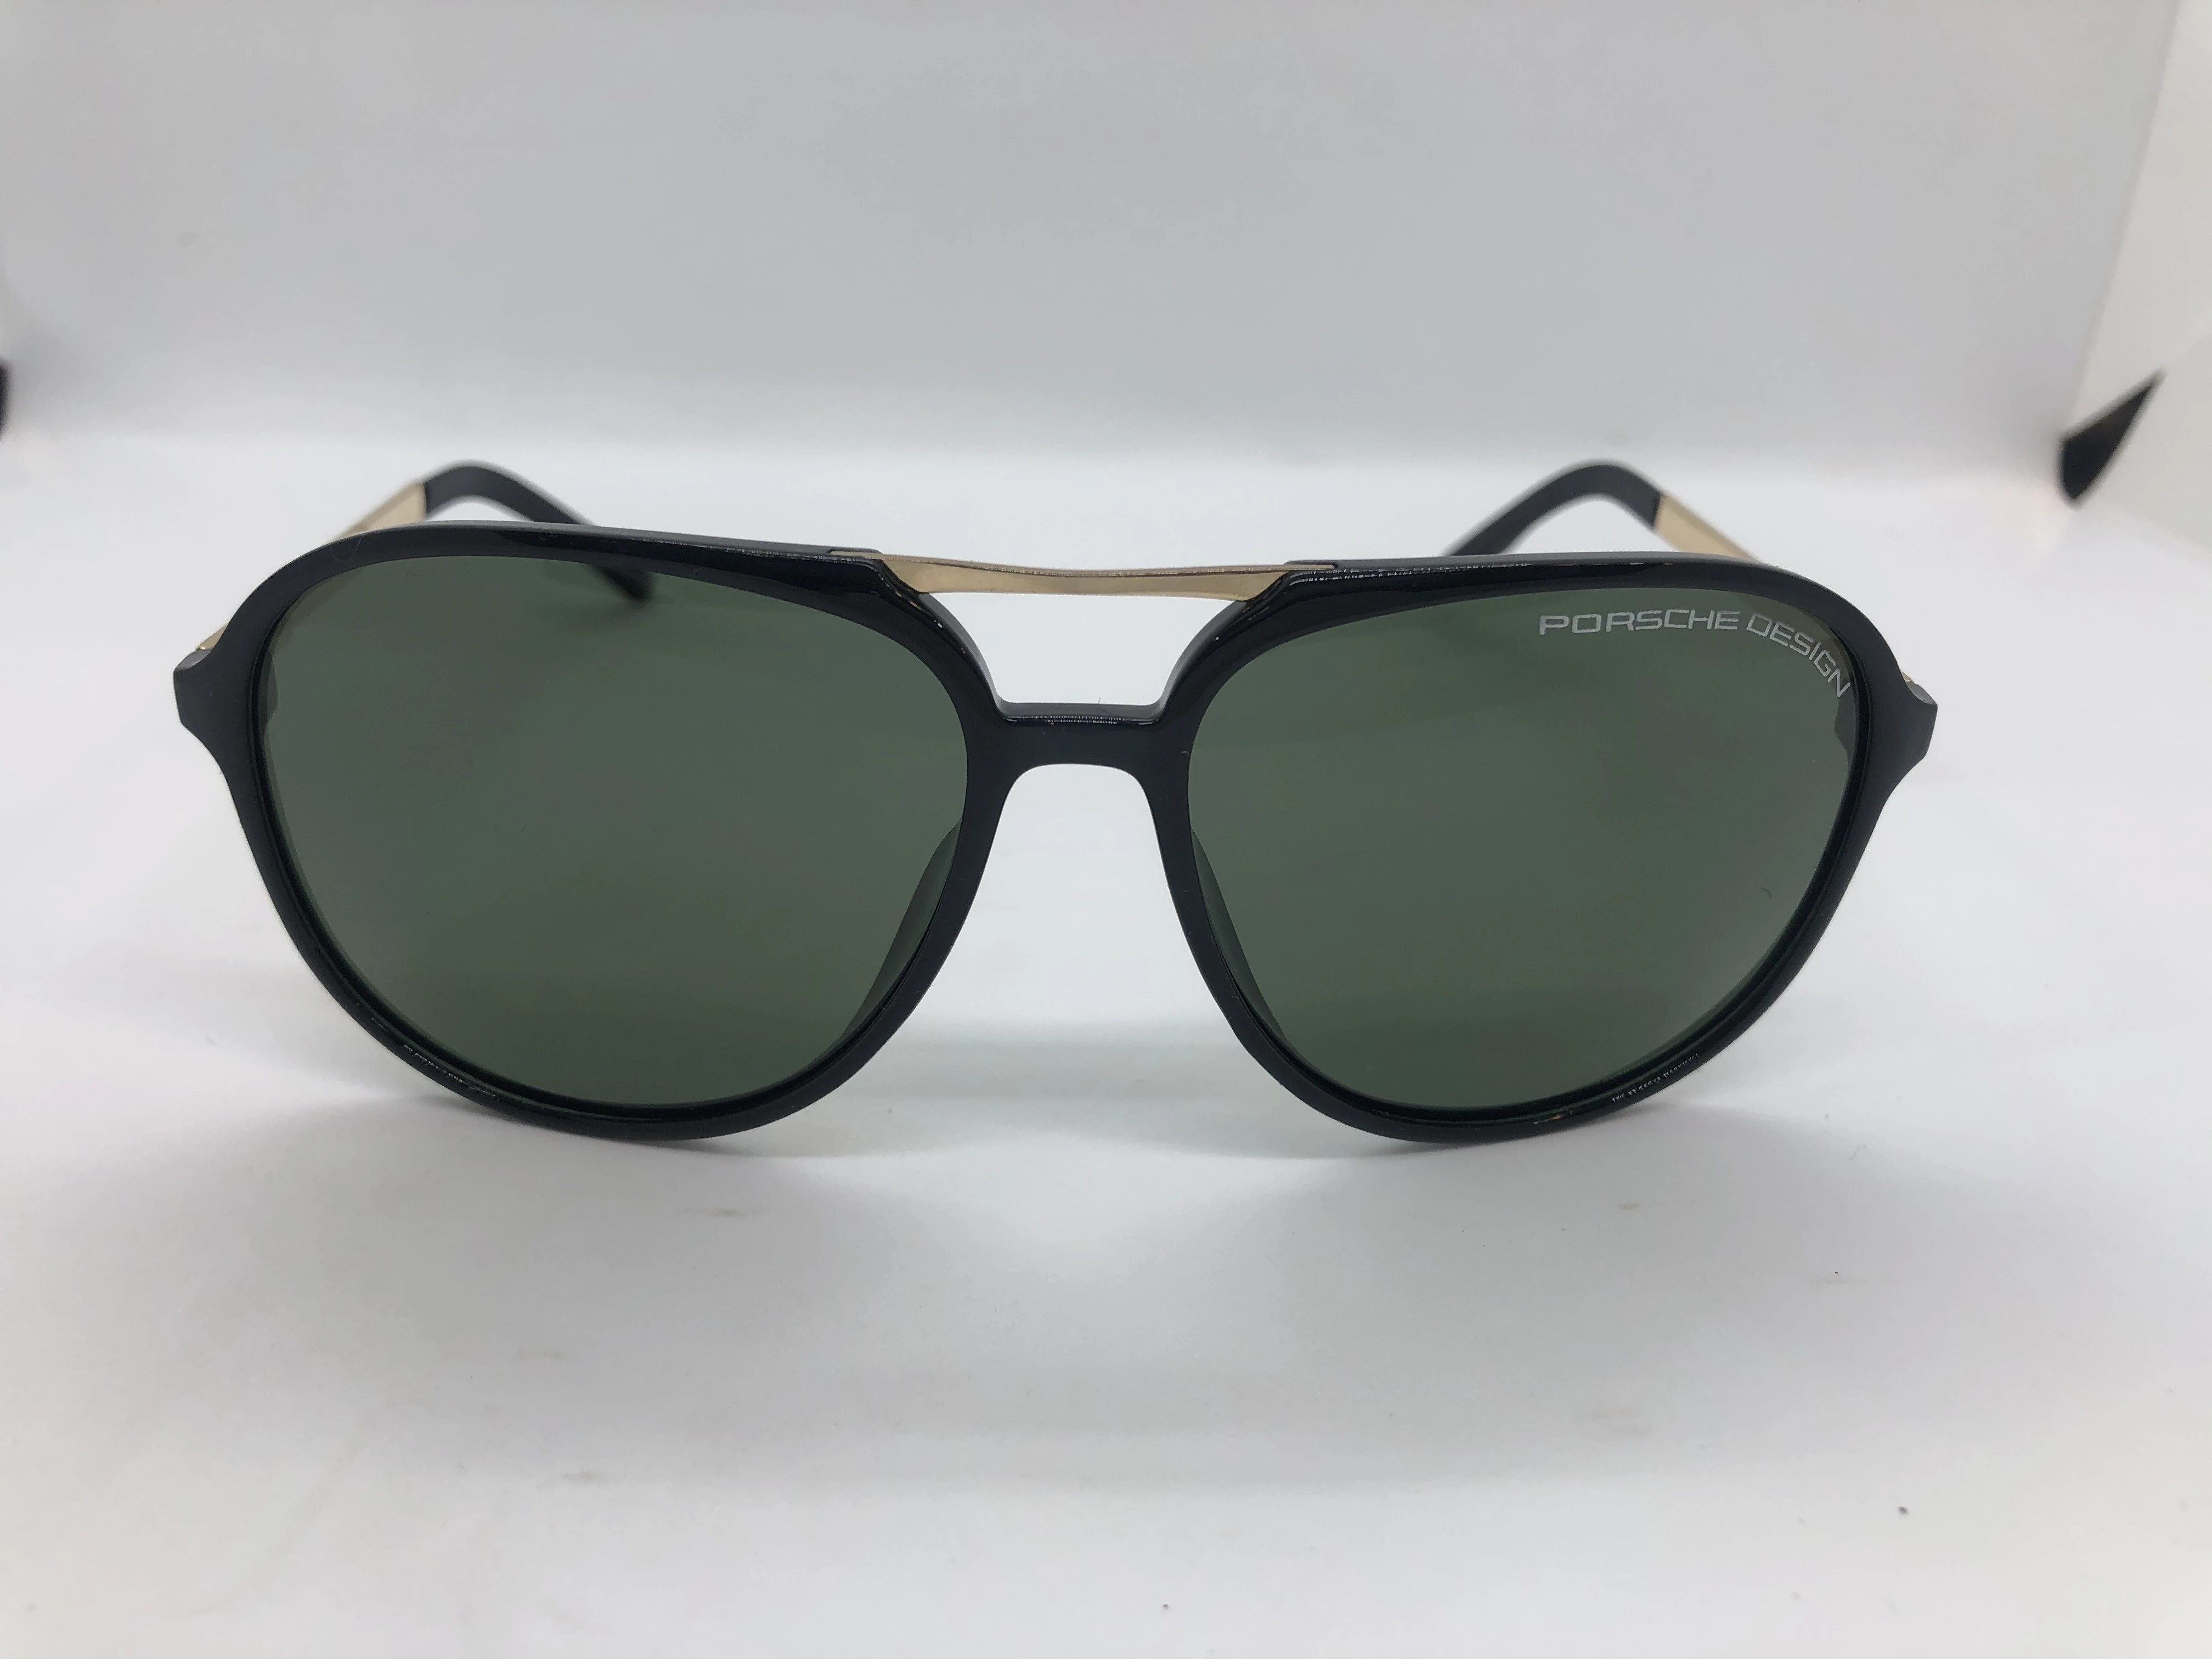 Sunglasses - Porsche Design - Black Frame Polycarbonate - Dark Green Lenses - Gold * Black Sunglass - For Men